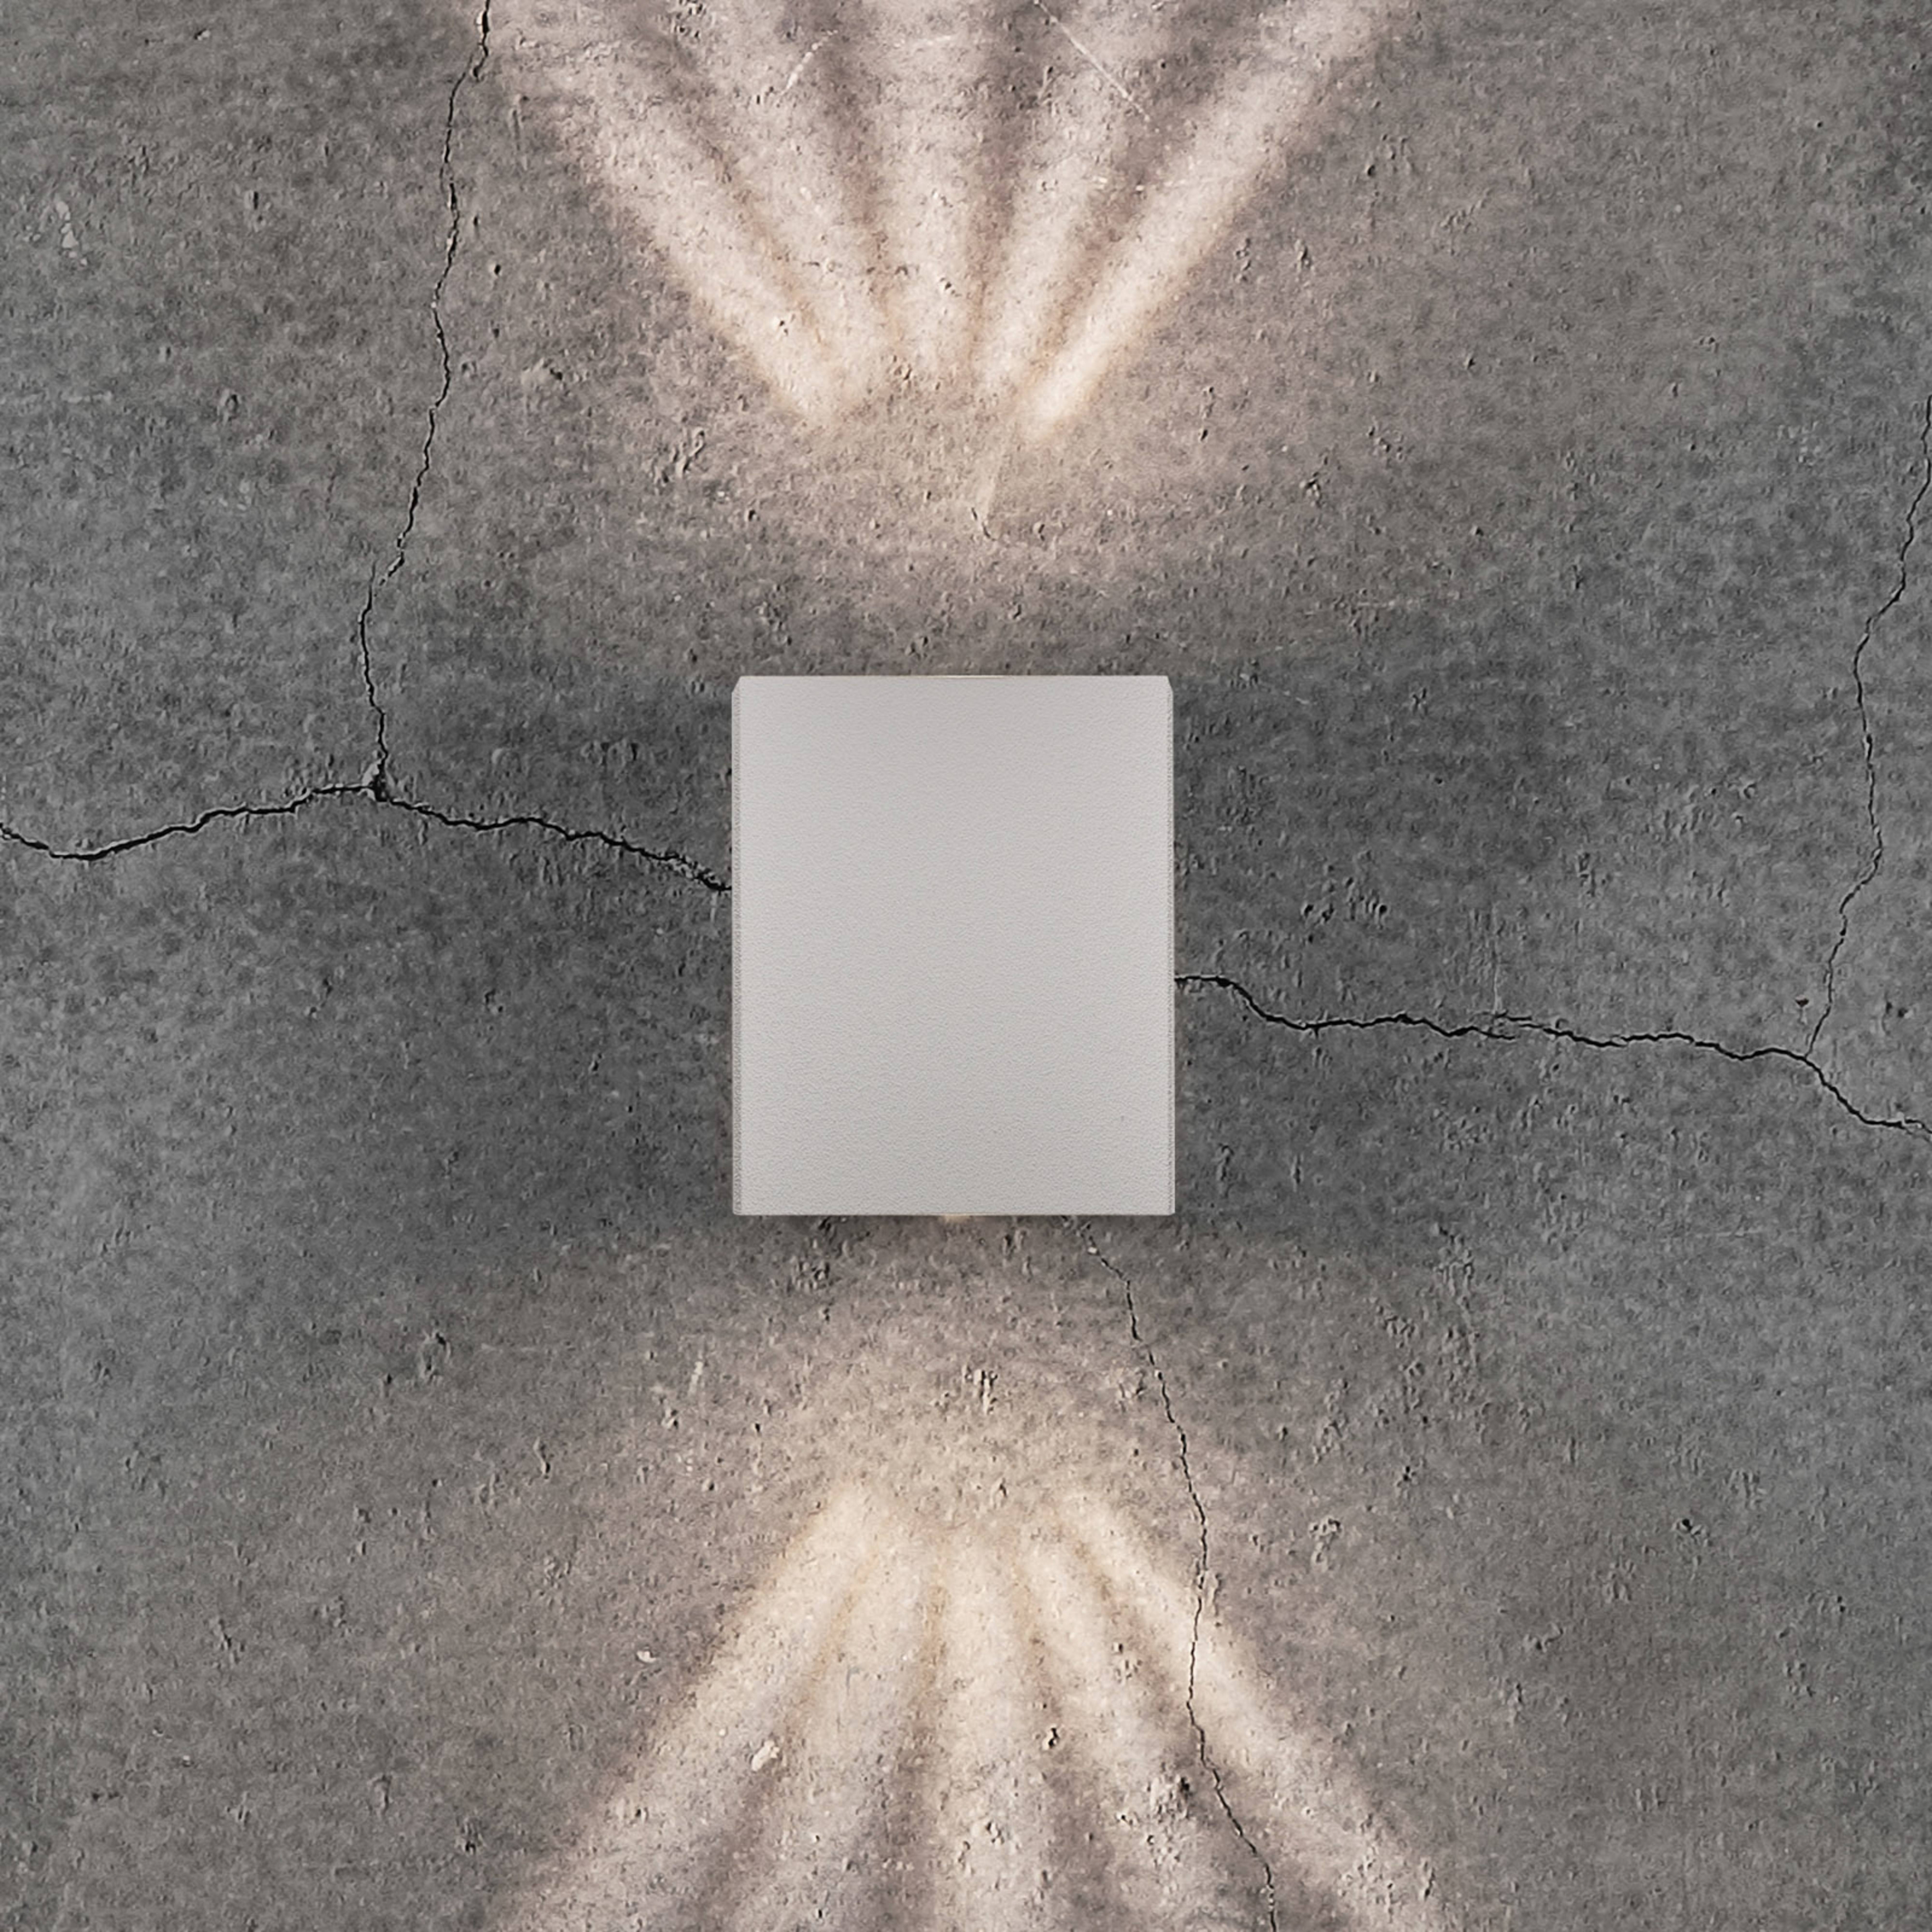 LED-Außenwandlampe Canto Kubi 2, 10 cm, weiß